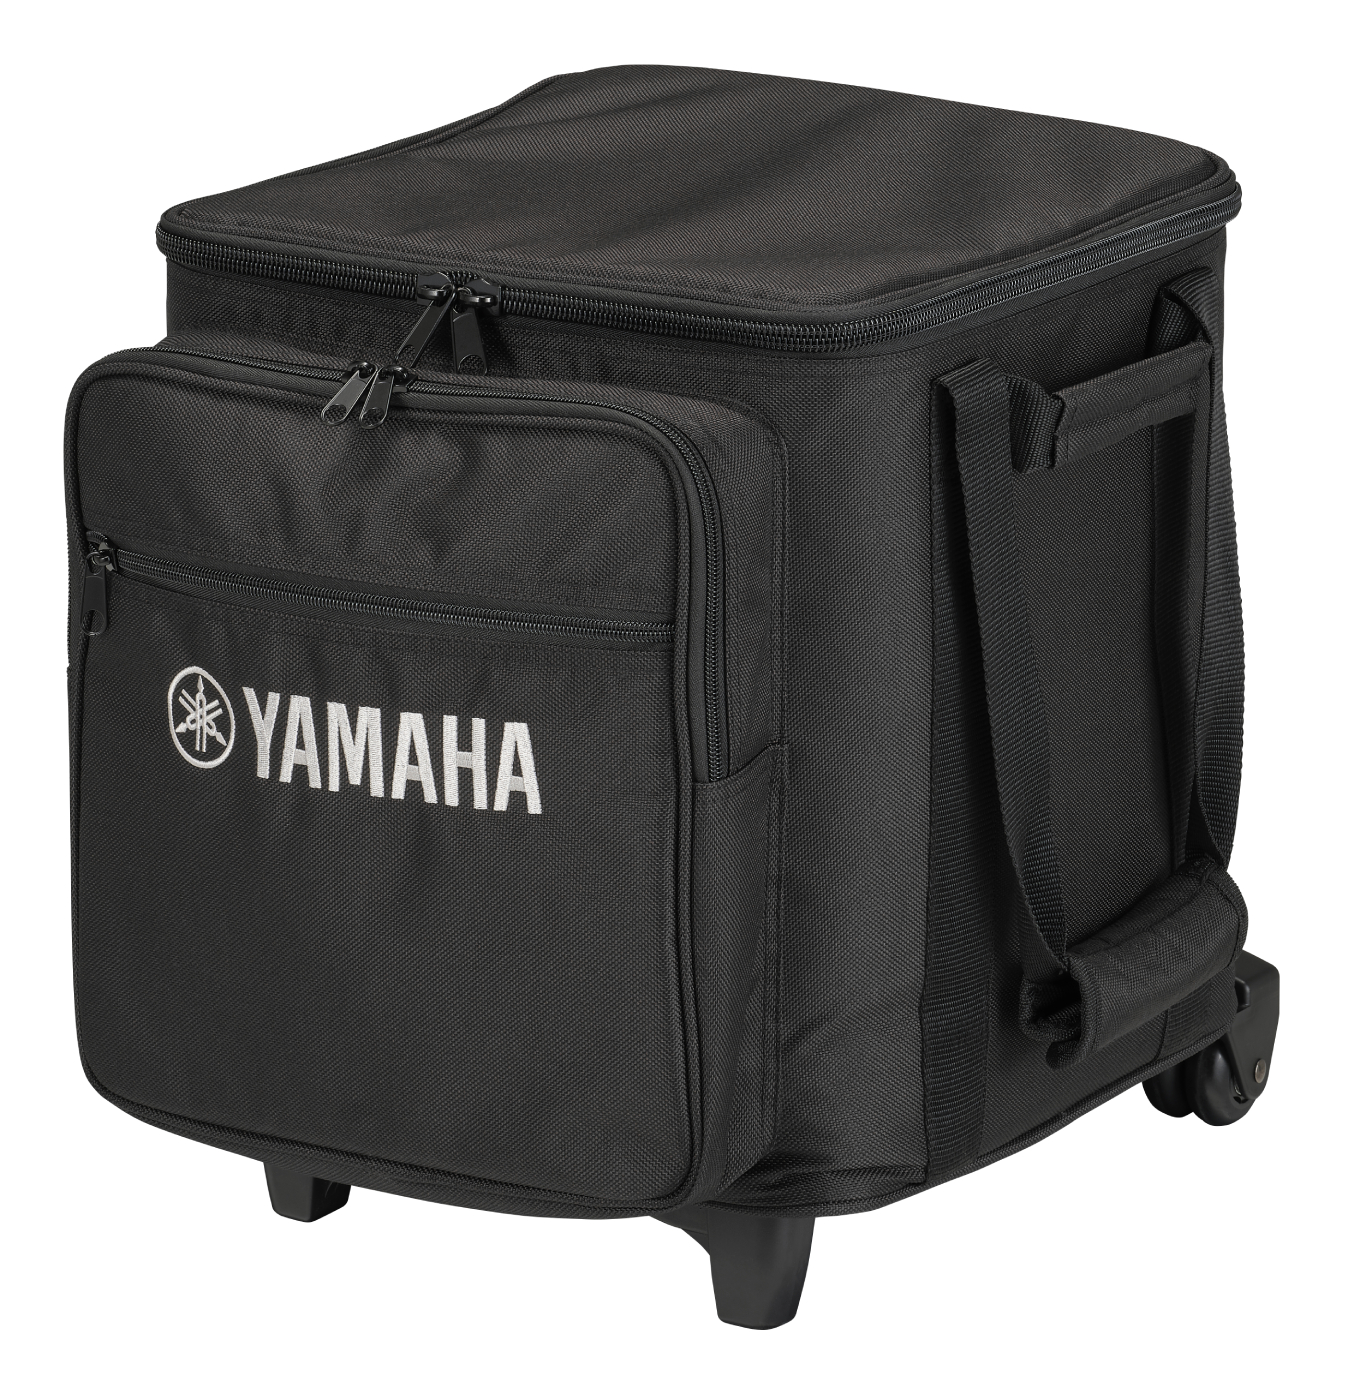 Yamaha Valise Pour Stagepas 200 - Flight Case Rangement - Variation 2